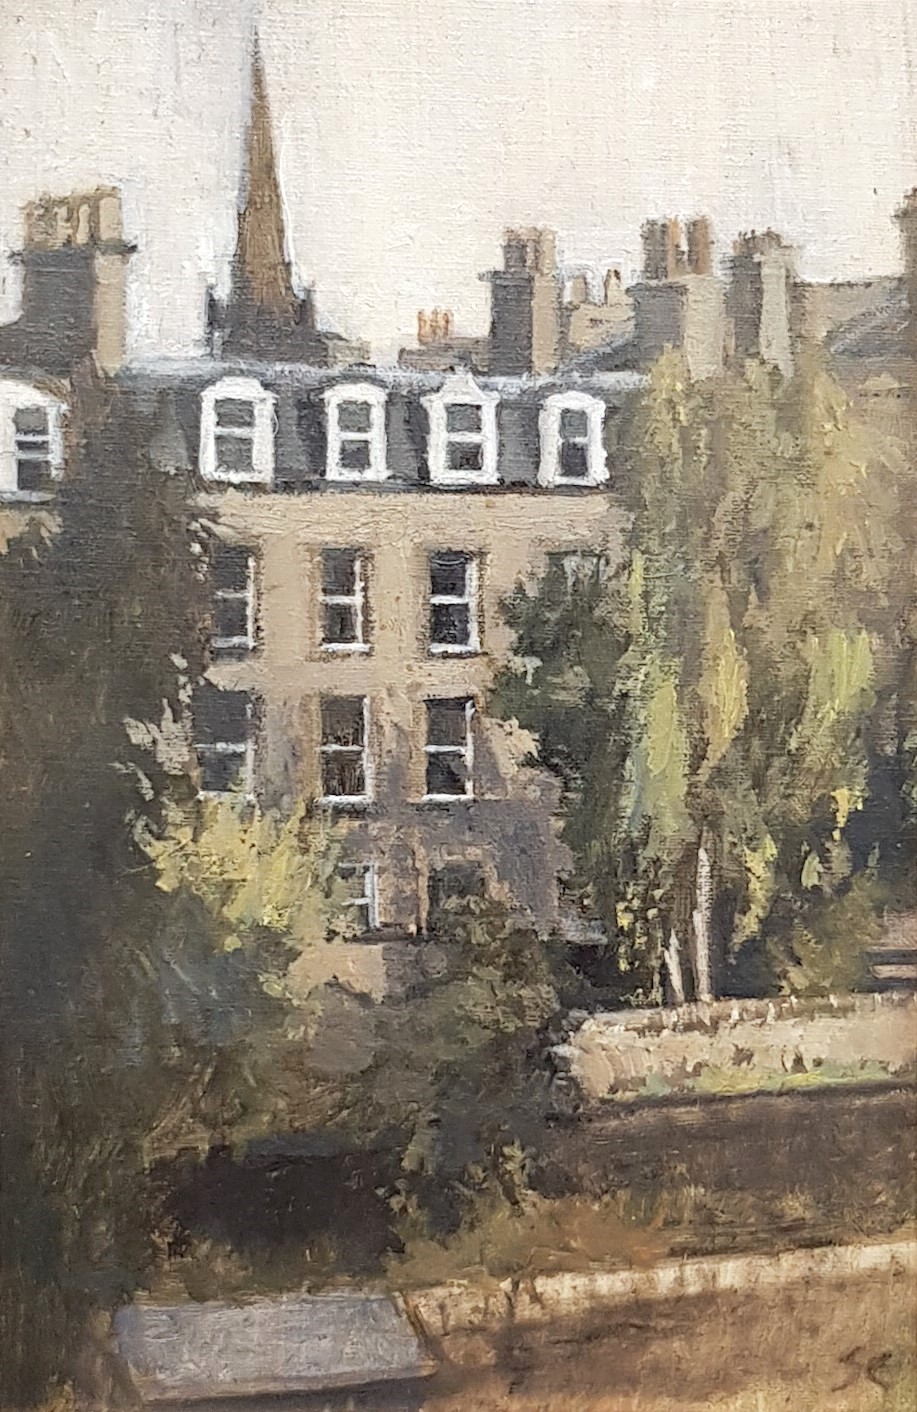 'Edinburgh Gardens' by artist Samuel Clarke